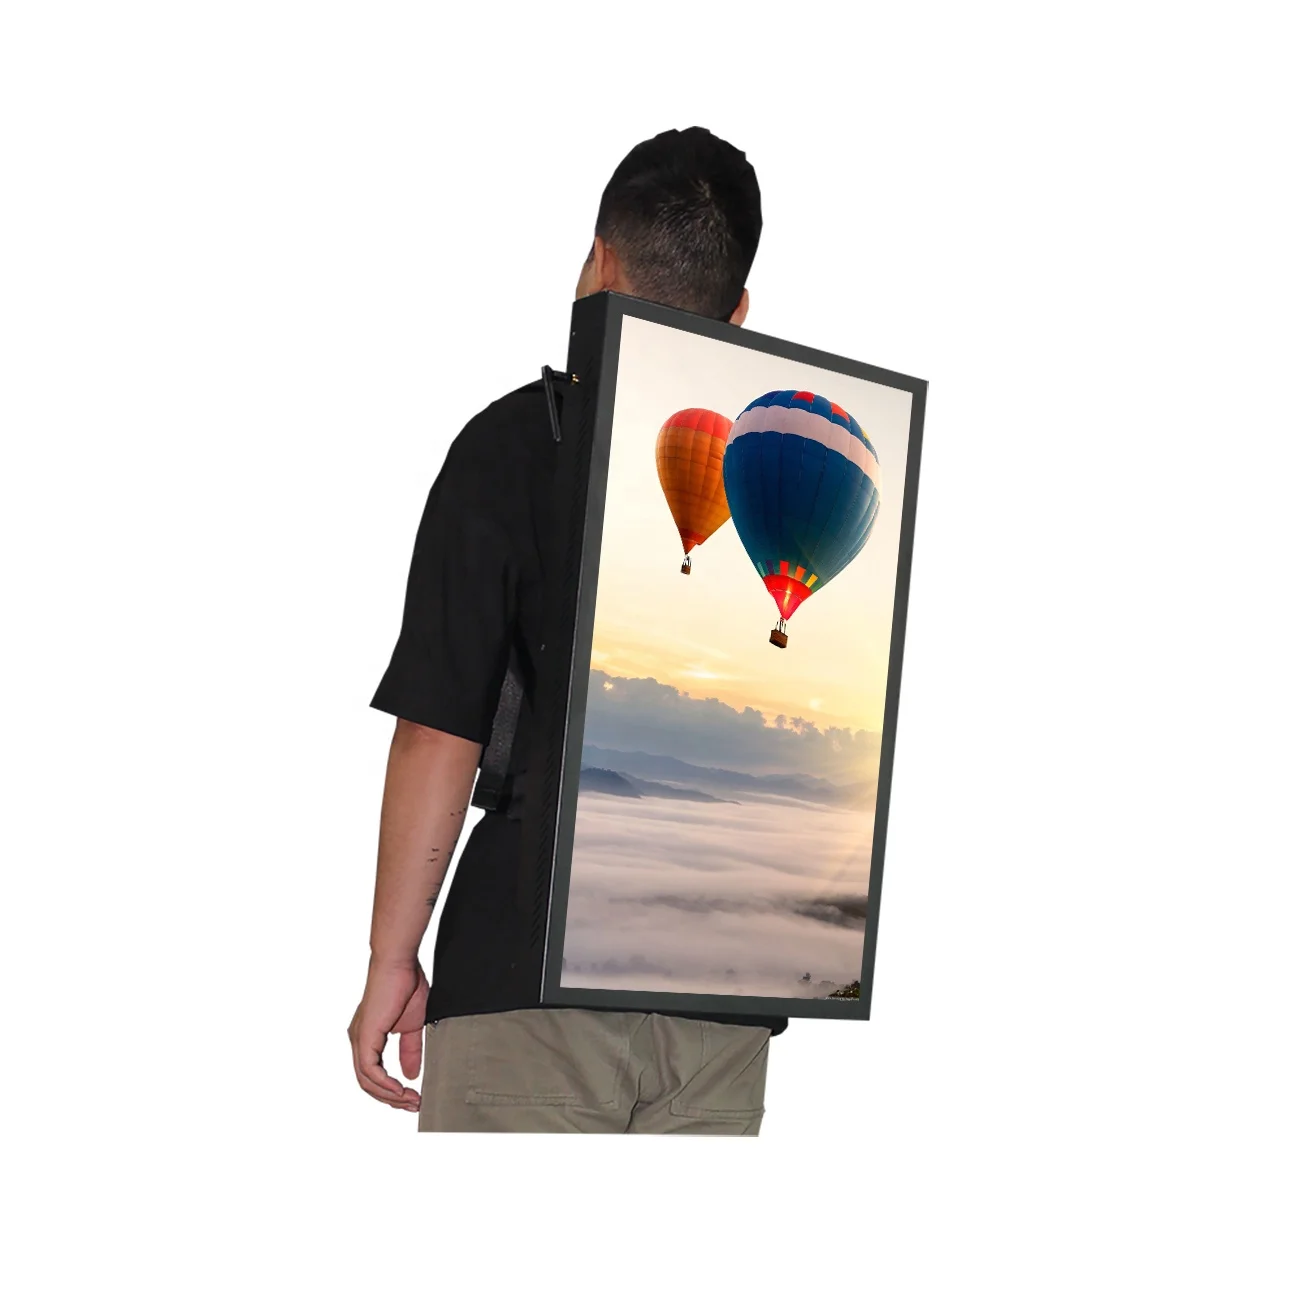 27 Inch Portable Digital Signage LCD Advertising Display Backpack Outdoor Walking Mobile Advertising TV Screen Billboard